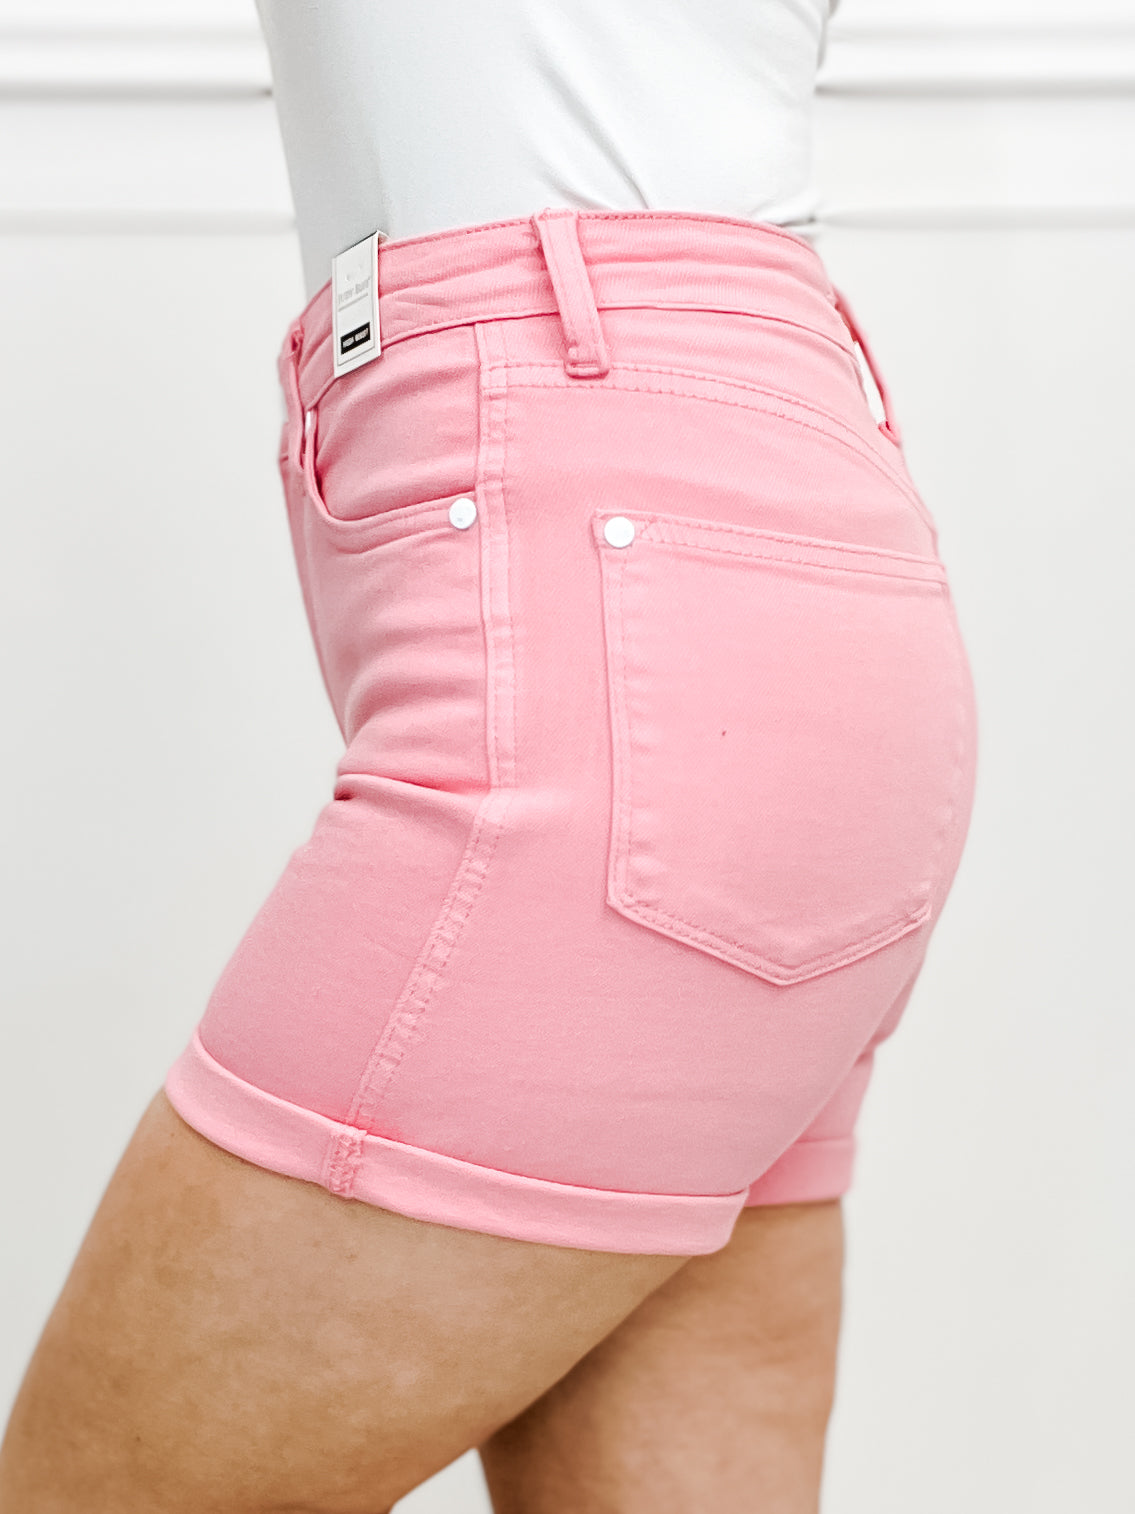 Judy Blue Hi-Rise Tummy Control Pink Garment Dyed Shorts